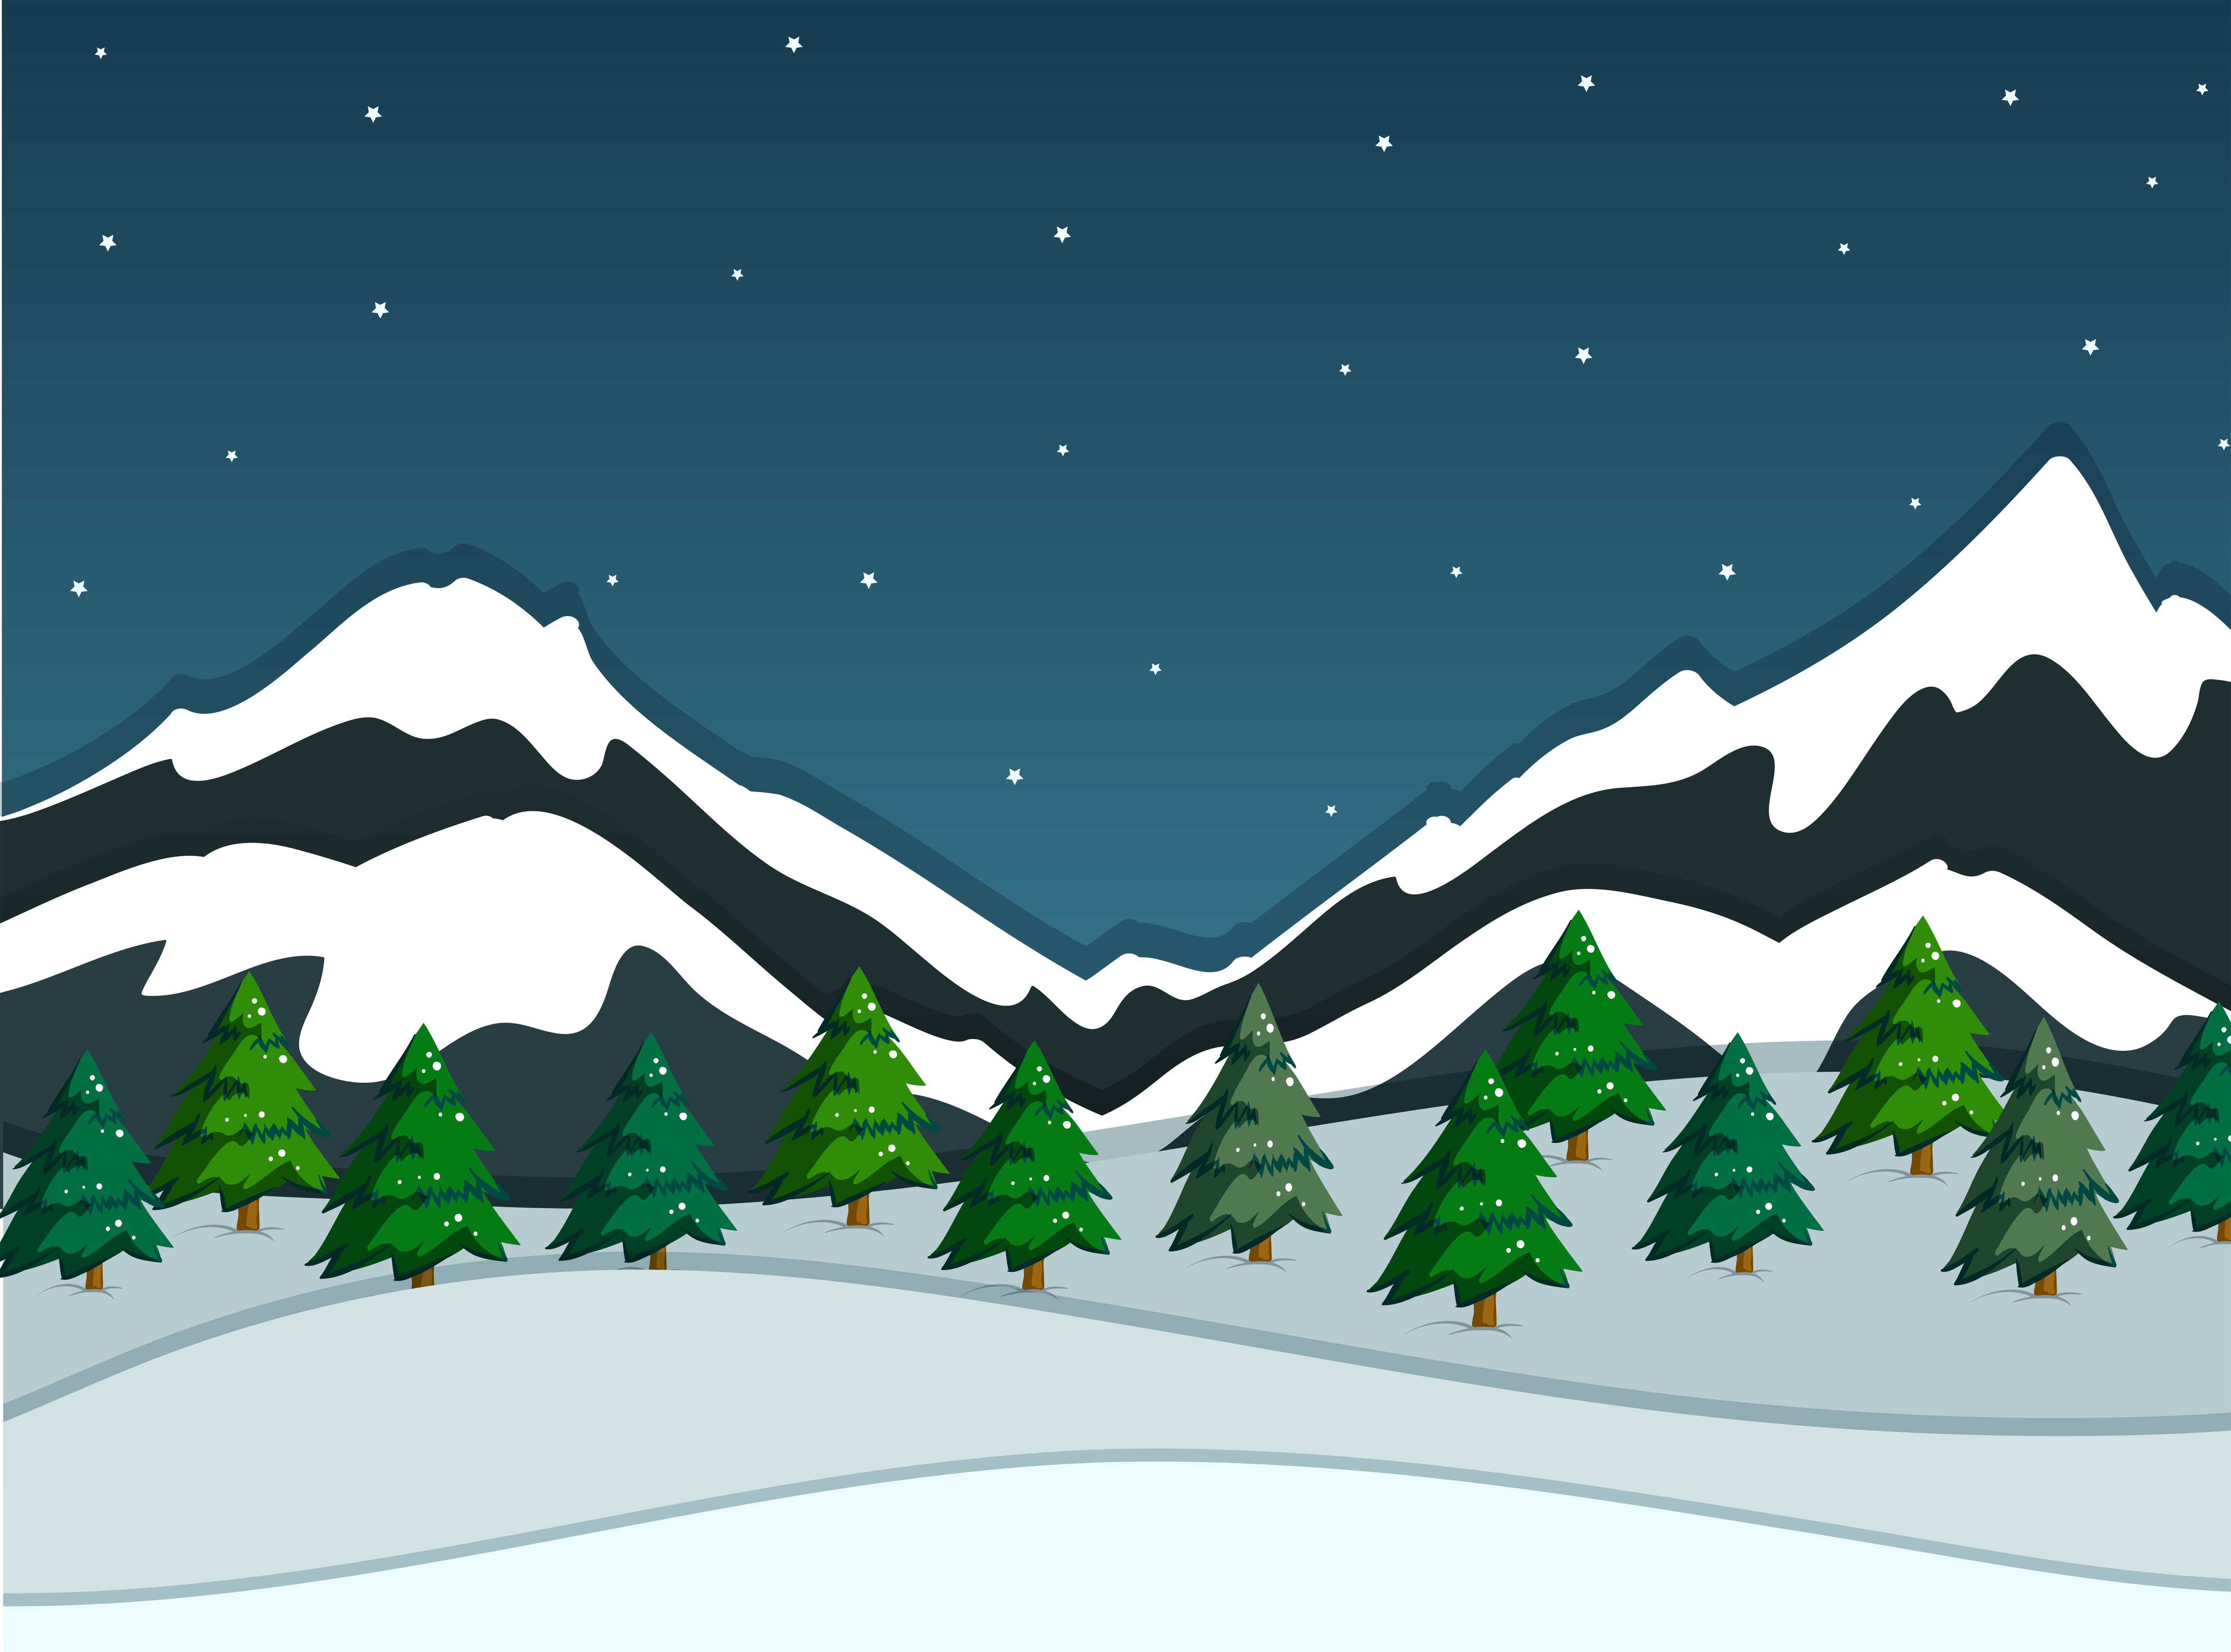 A Snowy Mountain Landscape Download Free Vectors Clipart Graphics Vector Art